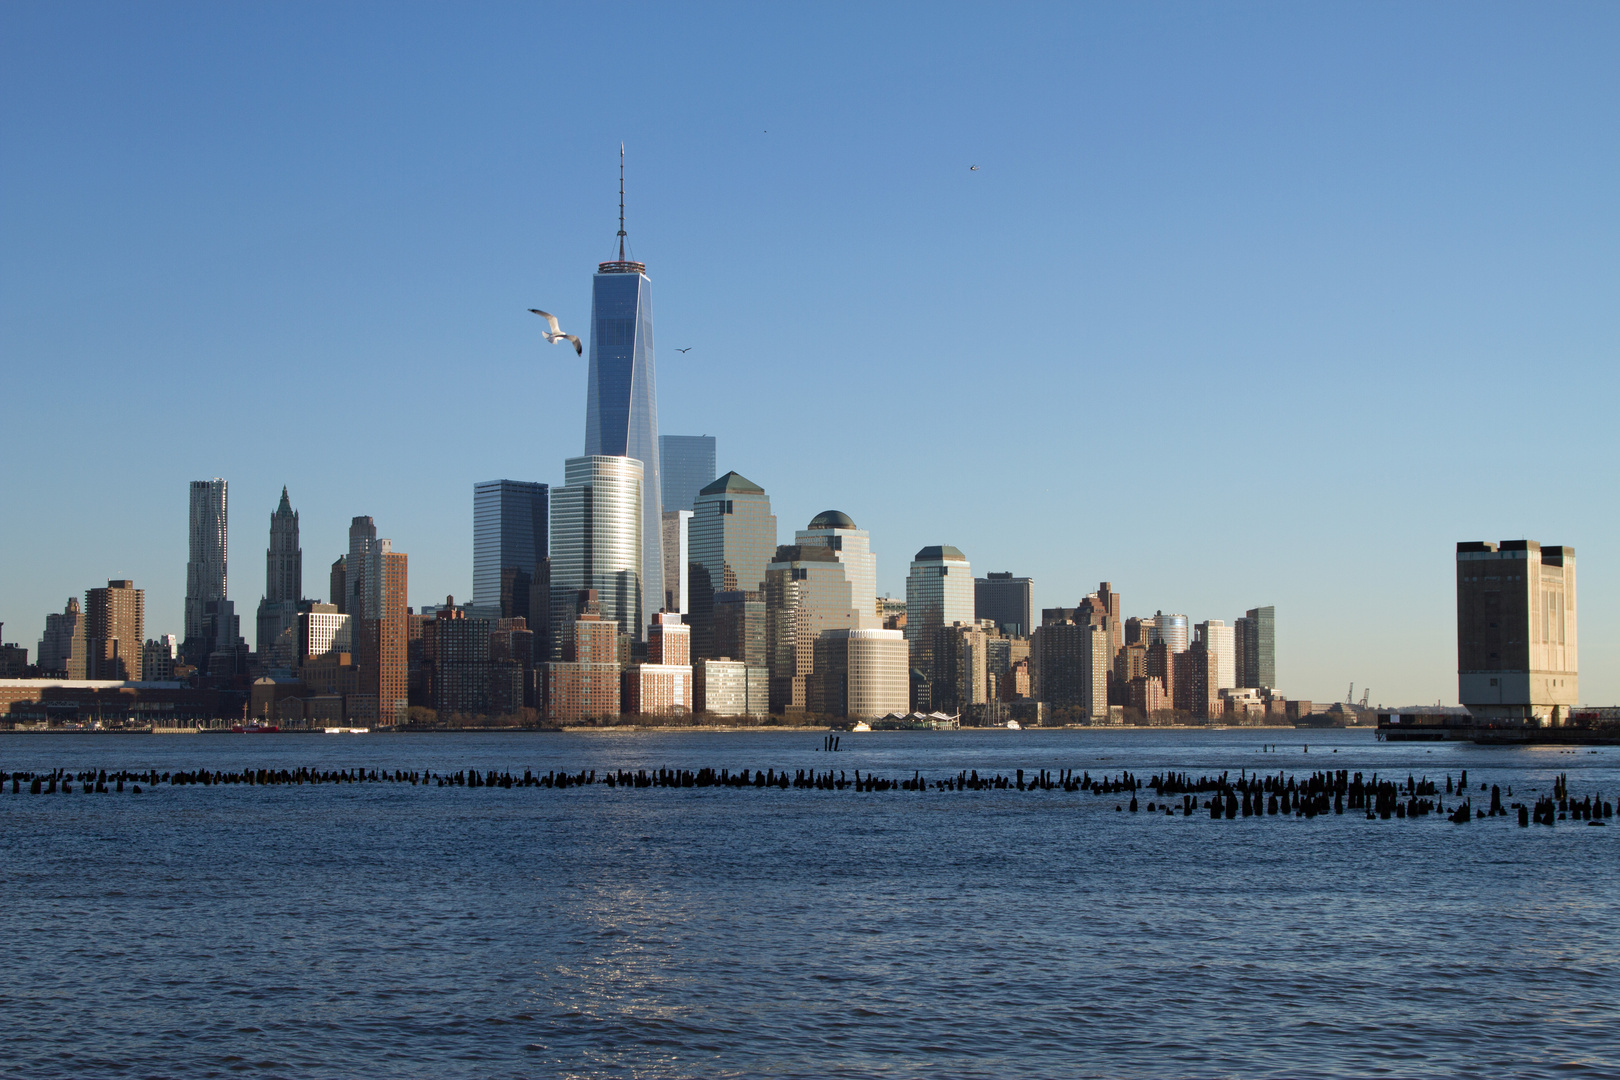 Hoboken 25. Peaceful birds. View across Hudson River to the new World Trade Center.